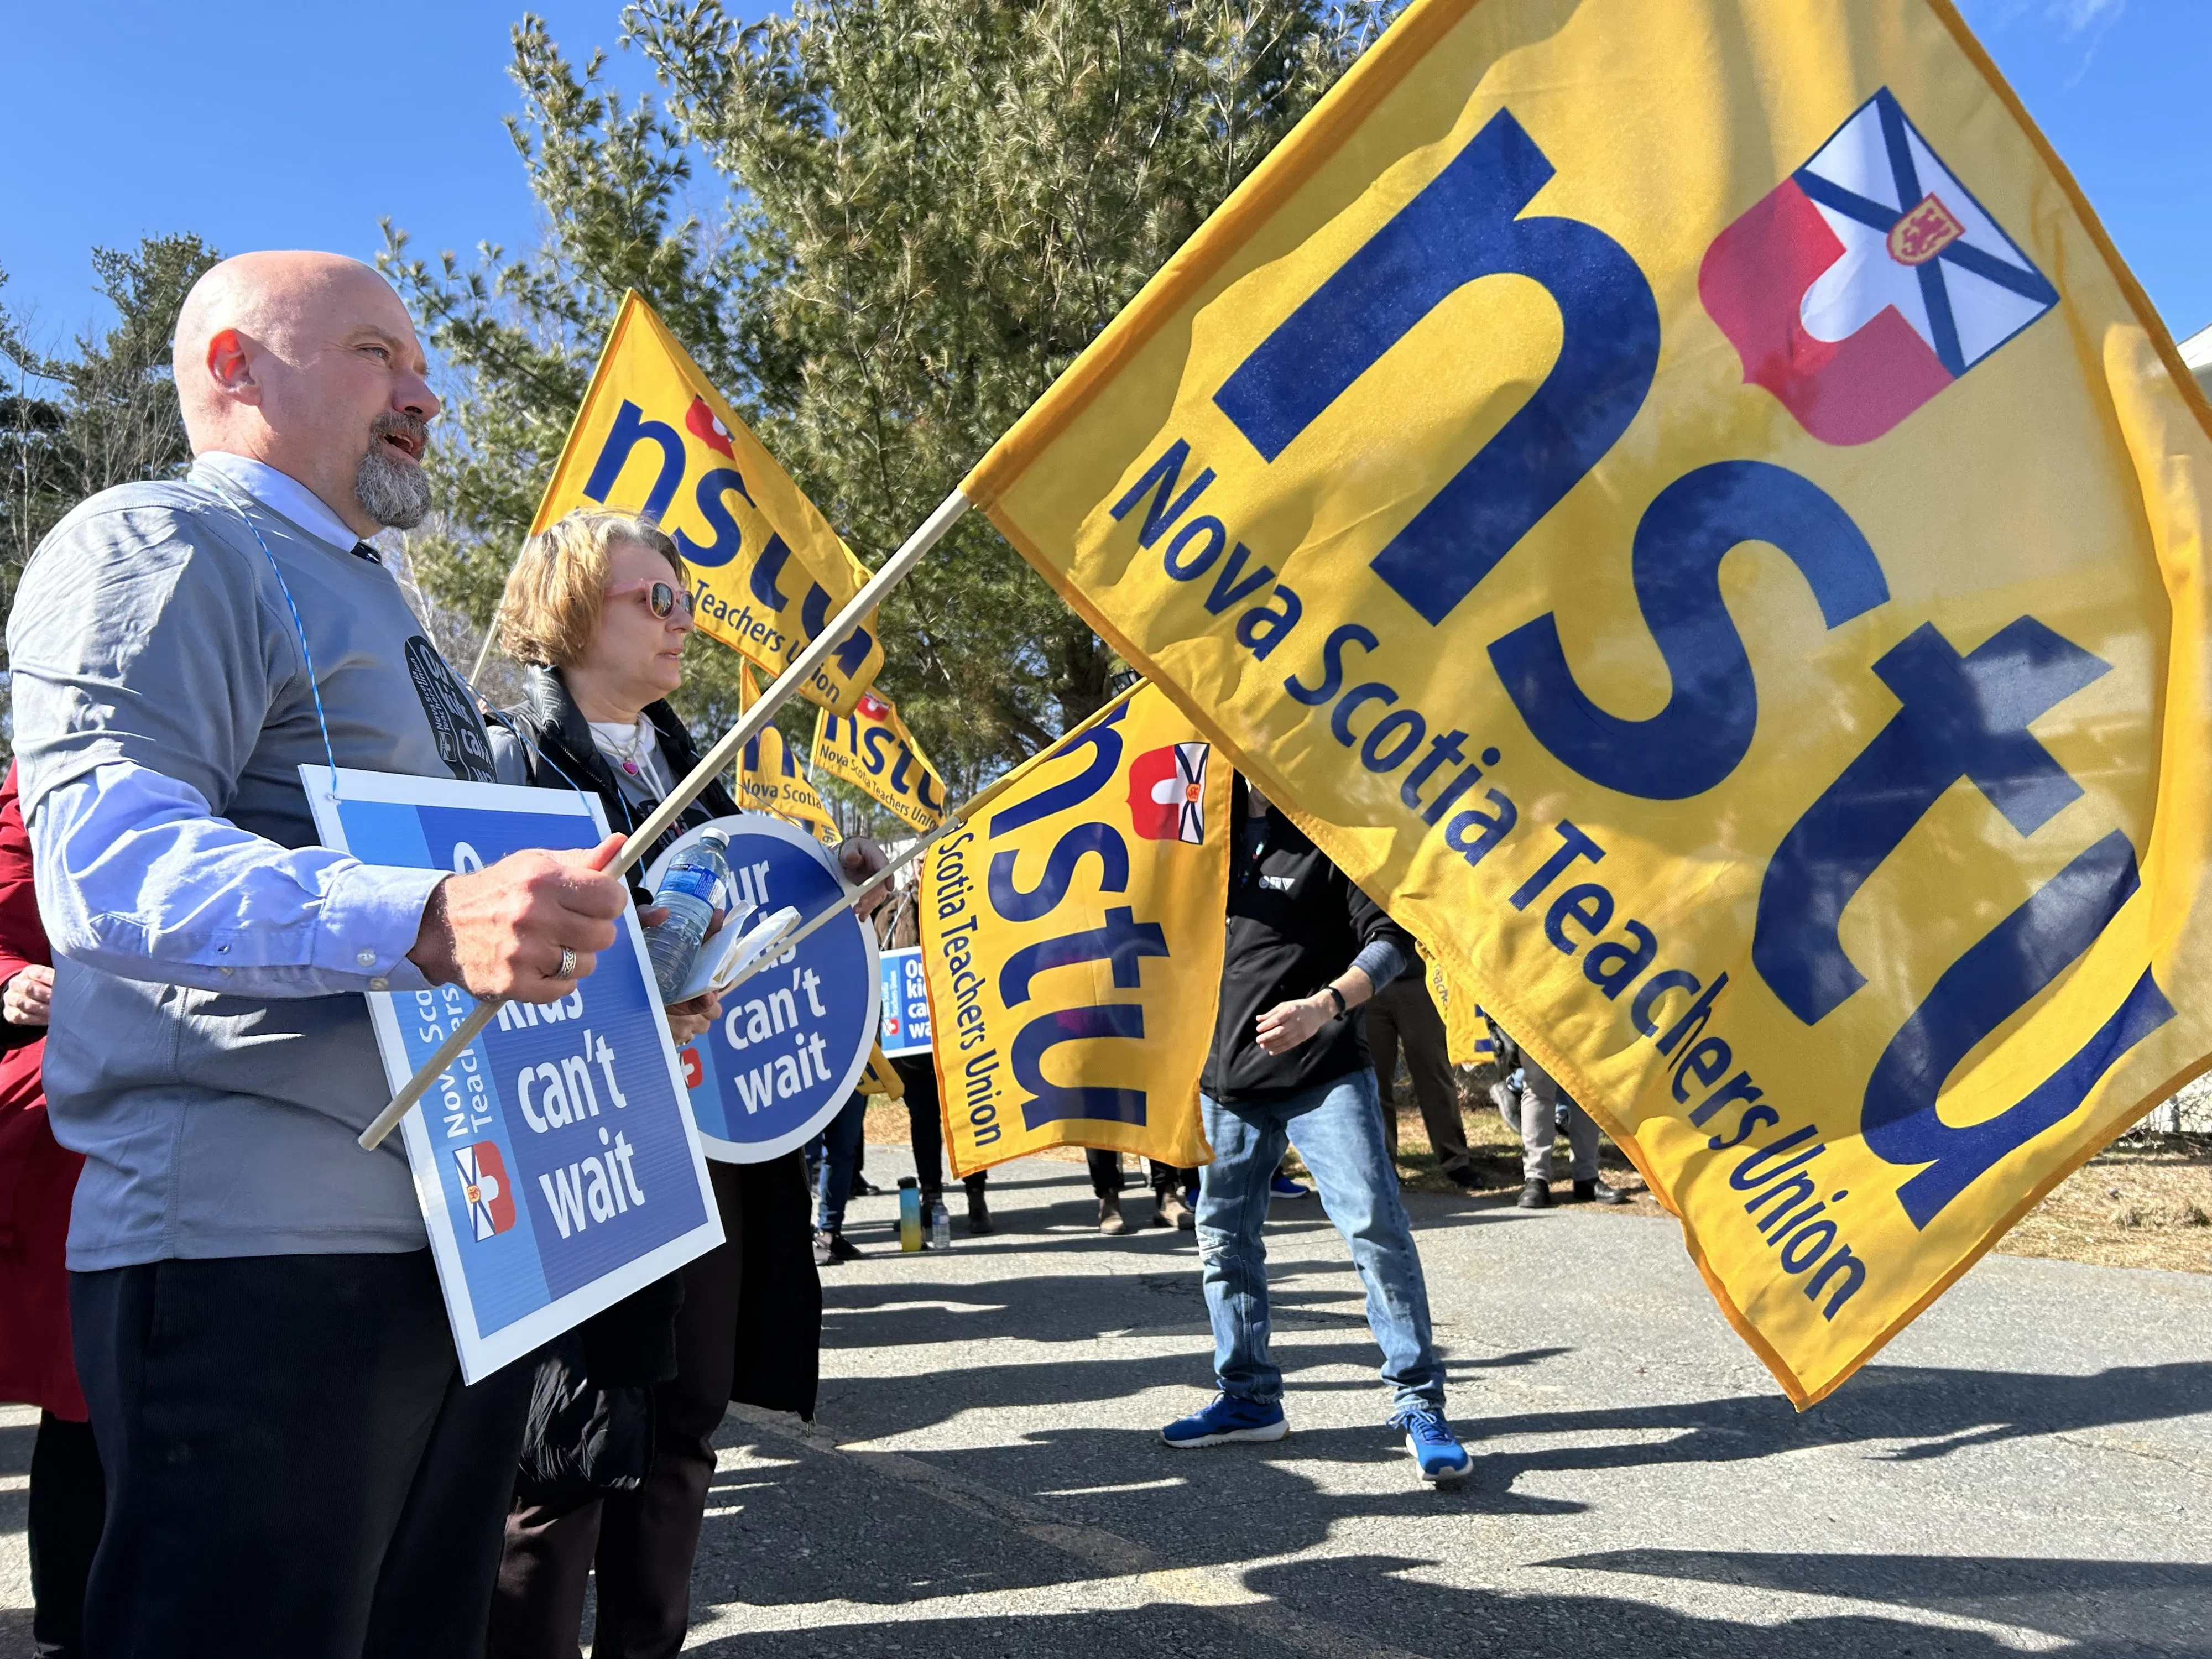 Teachers union agreement would raise wages, improve prep time